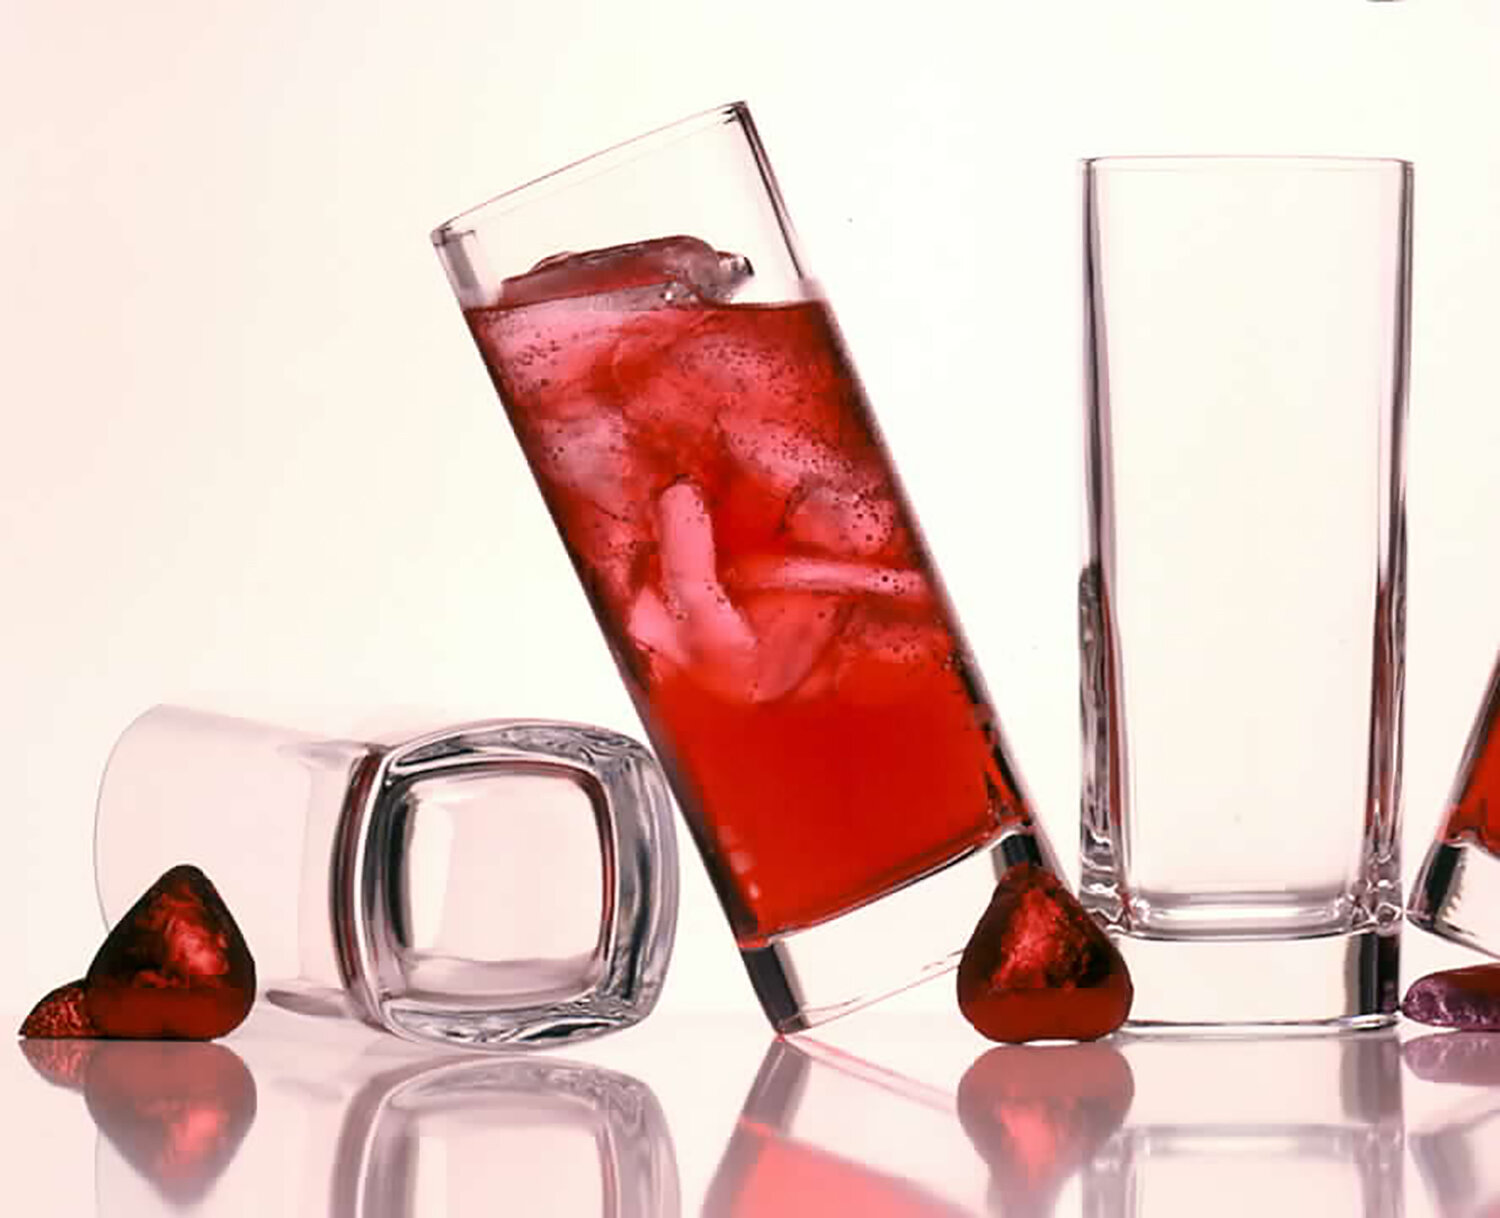 Luigi Bormioli Strauss Beverage Glass (Set of 6)